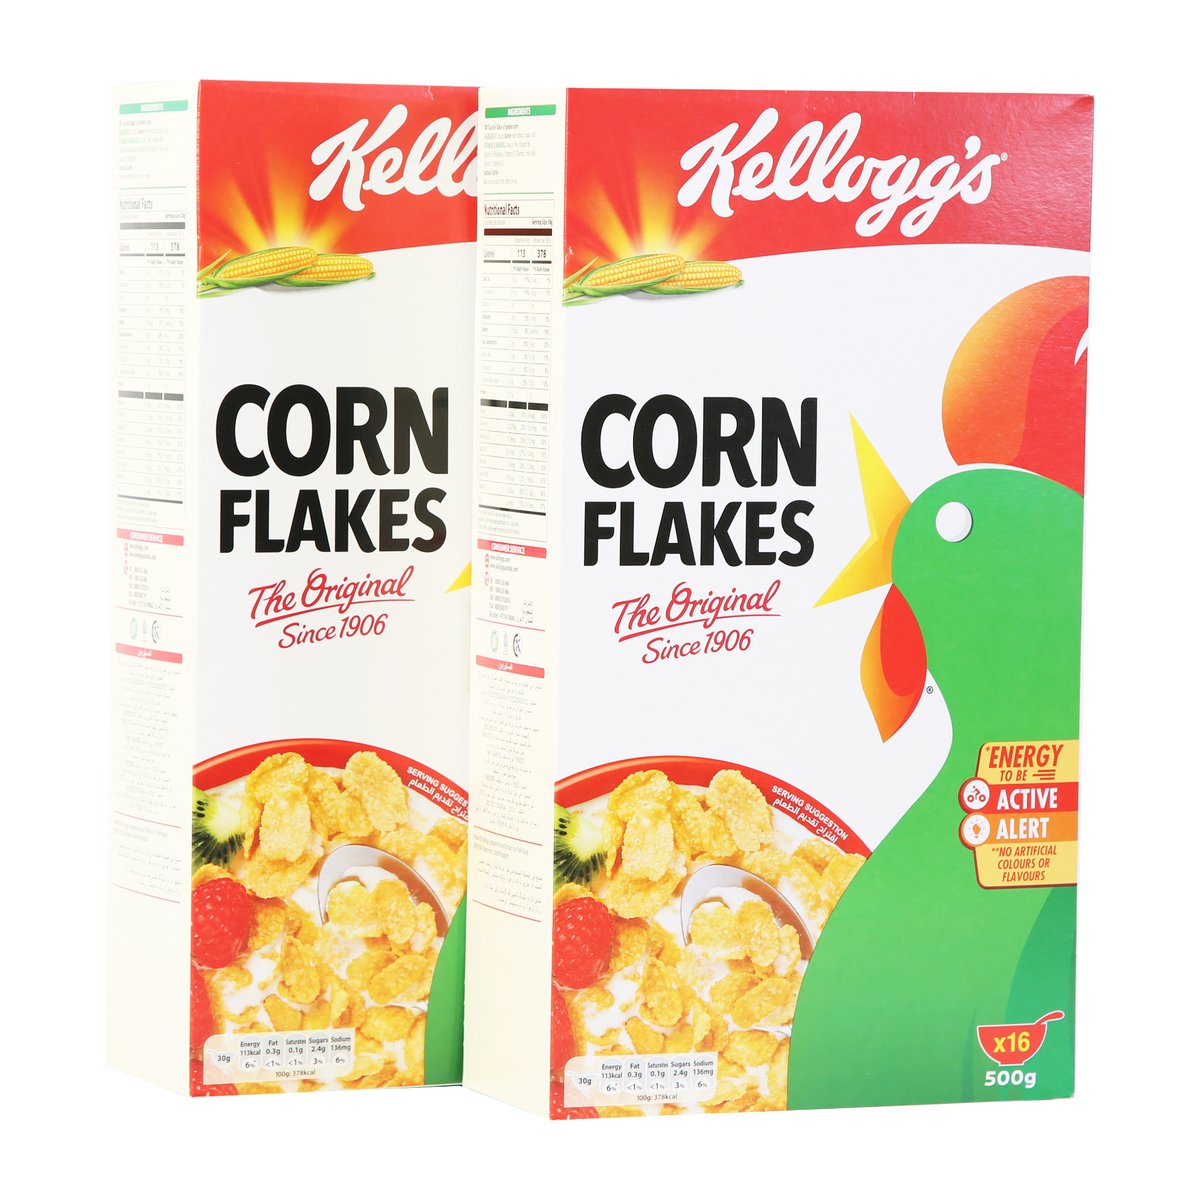 Kellogg's Corn Flakes The Original 500 g Online at Best Price